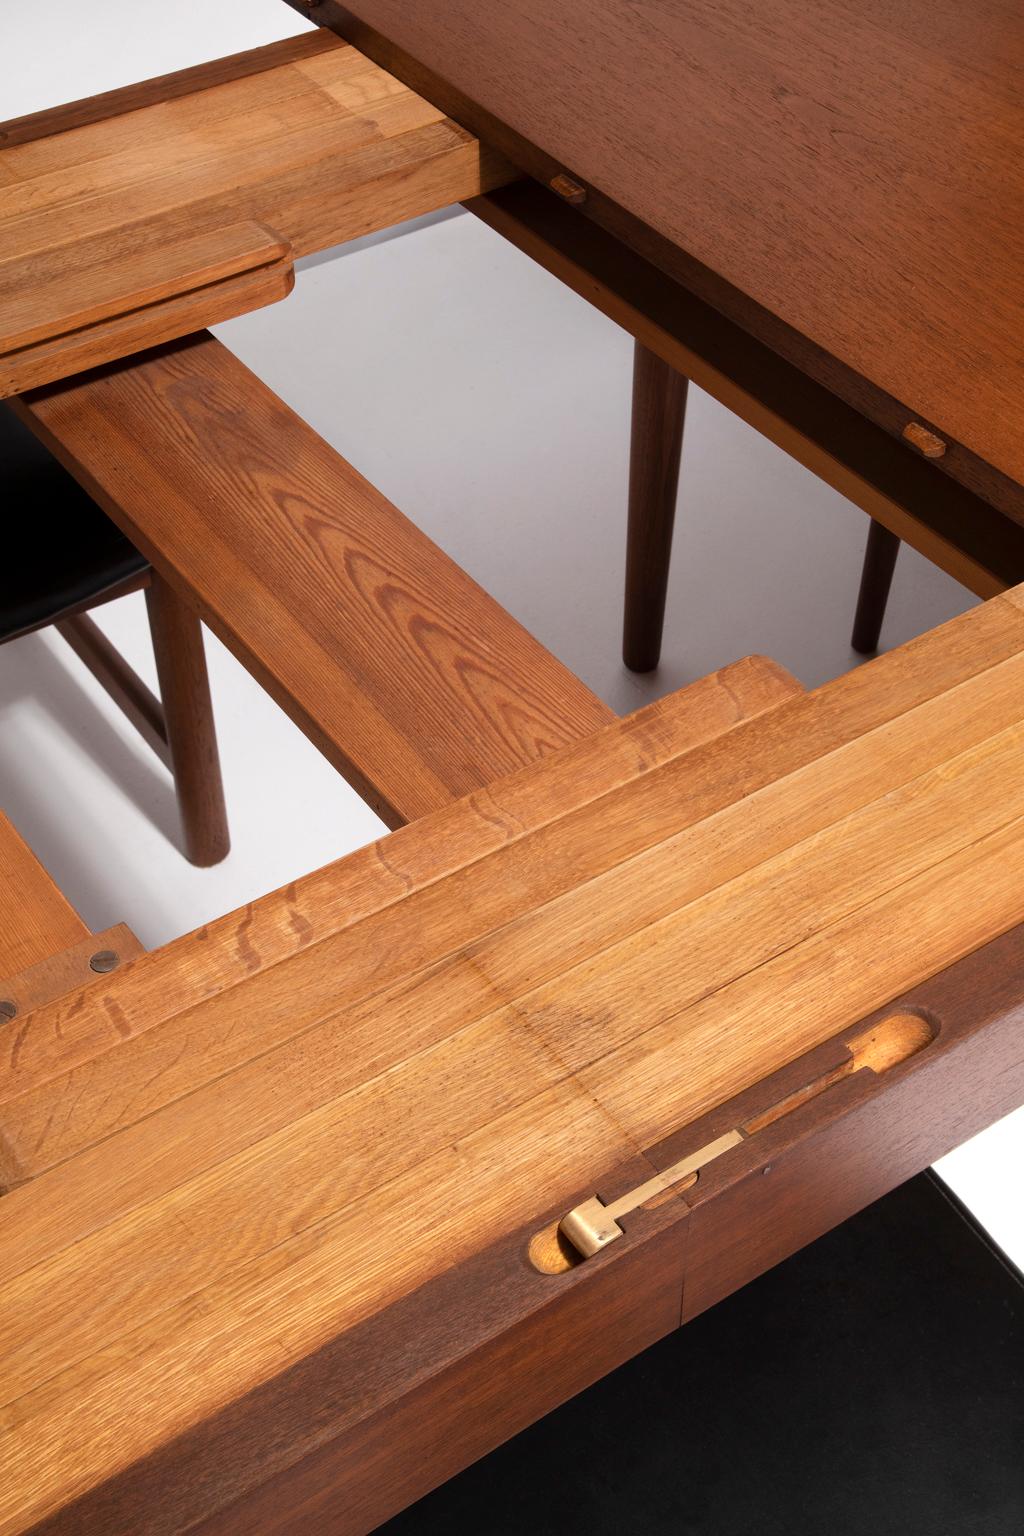 Henrik Worts Erik Worts Danish Mid-Century Modern Mahogany Table & Chairs For Sale 11